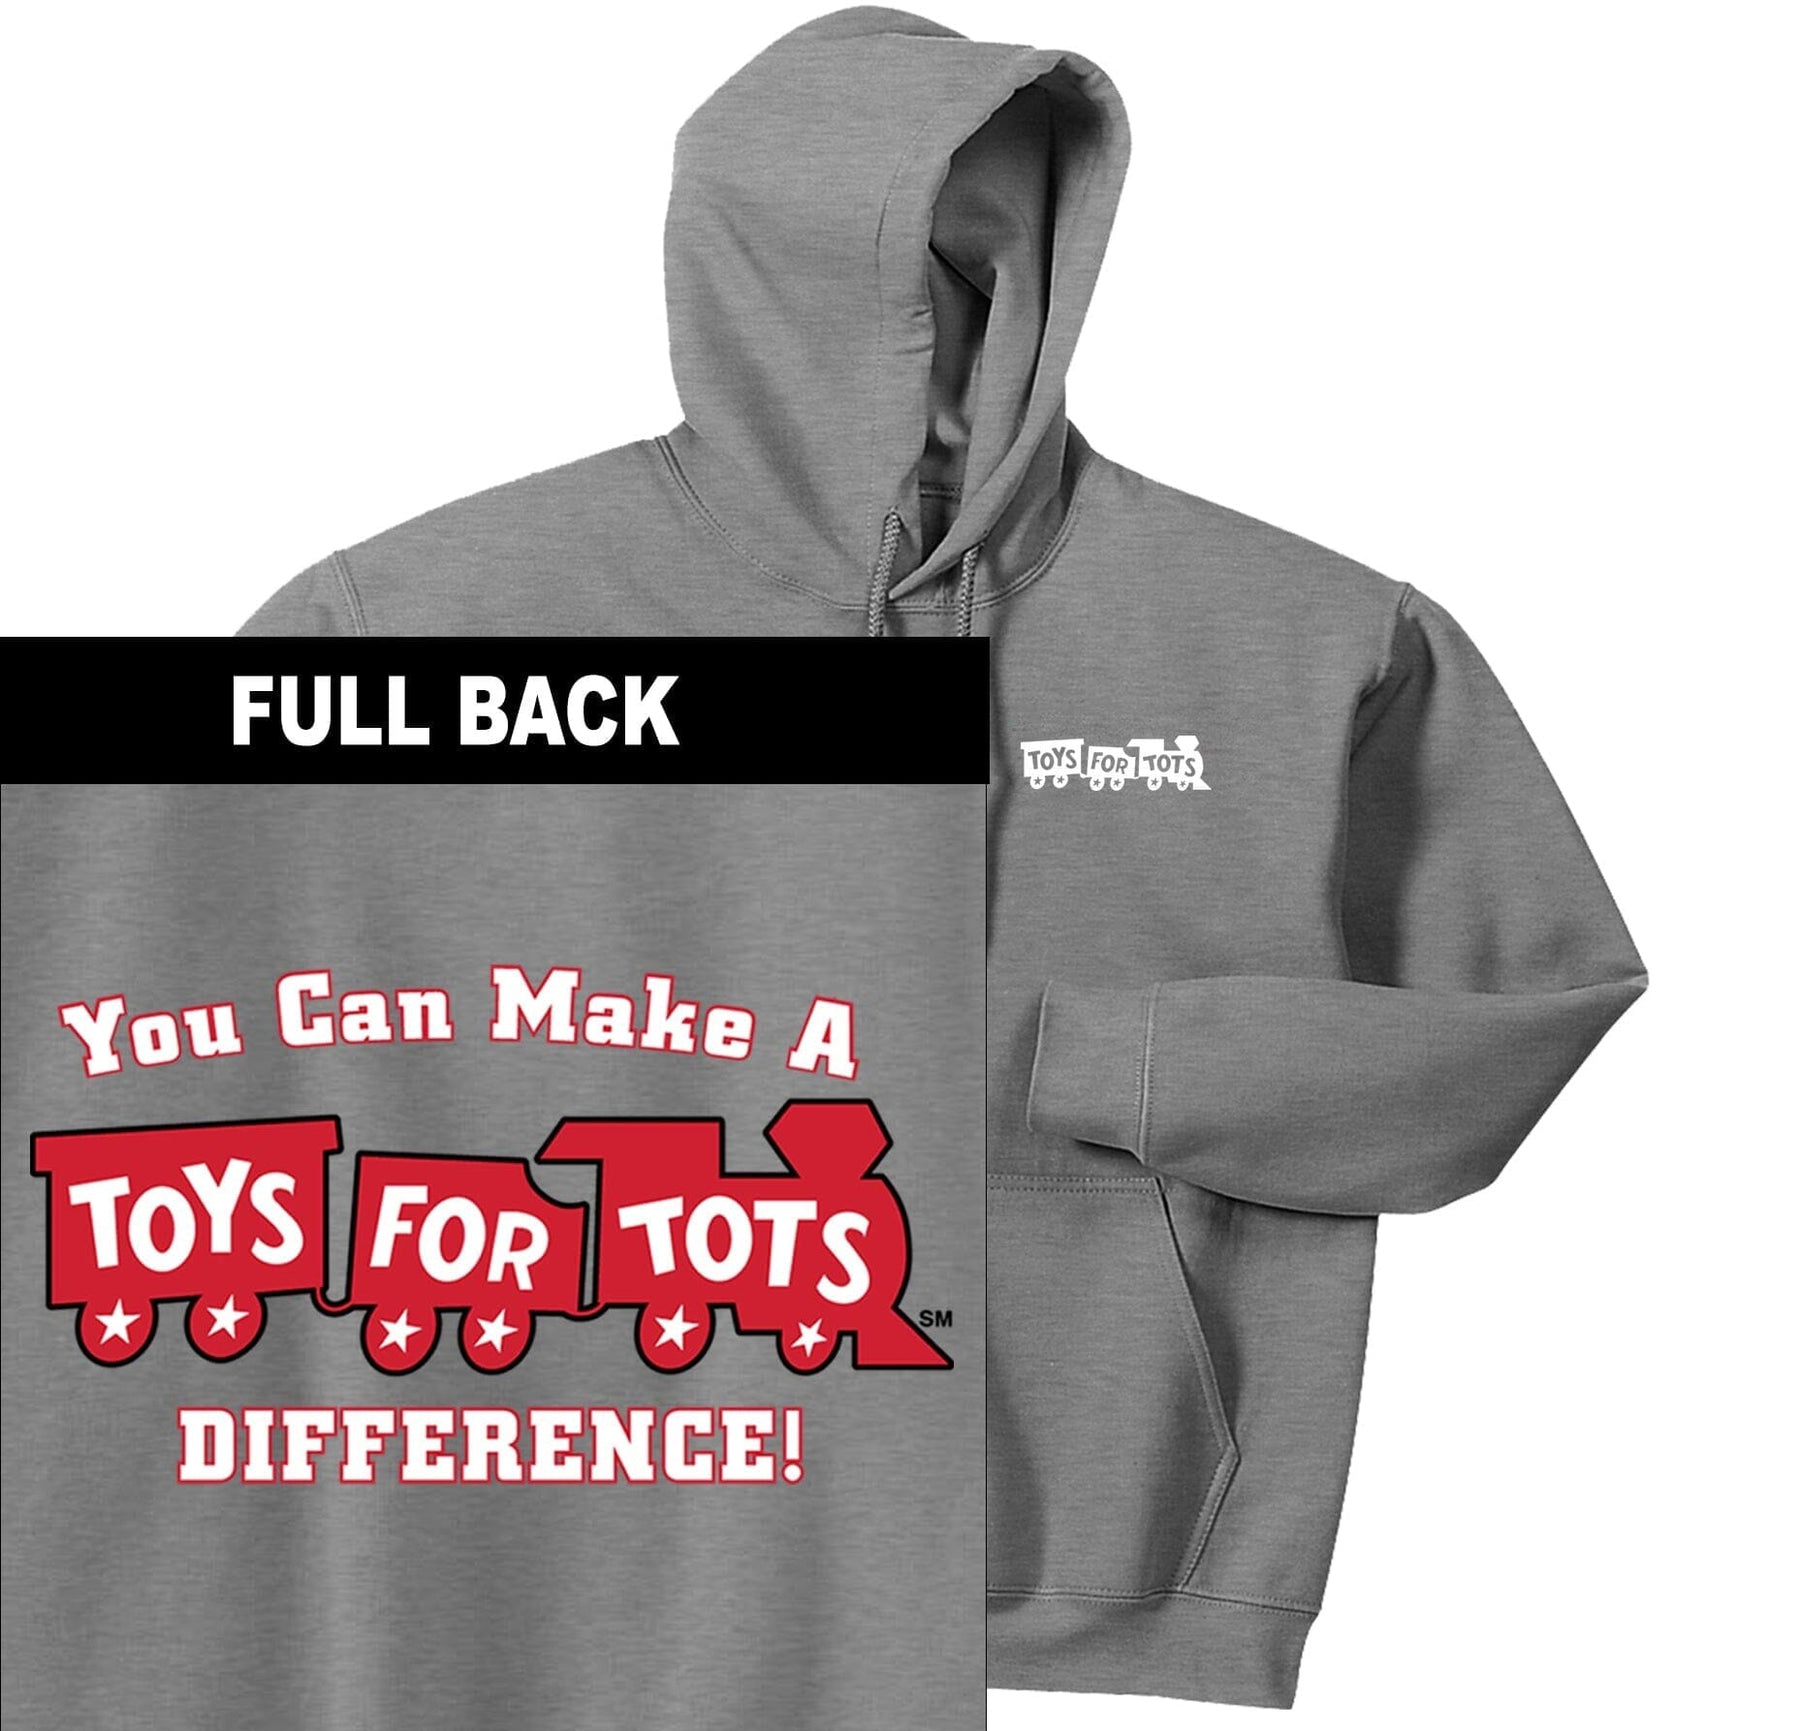 Make a Difference TFT Train 2-Sided Hoodie TFT Sweatshirt/hoodie marinecorpsdirecttft S SPORT GRAY 